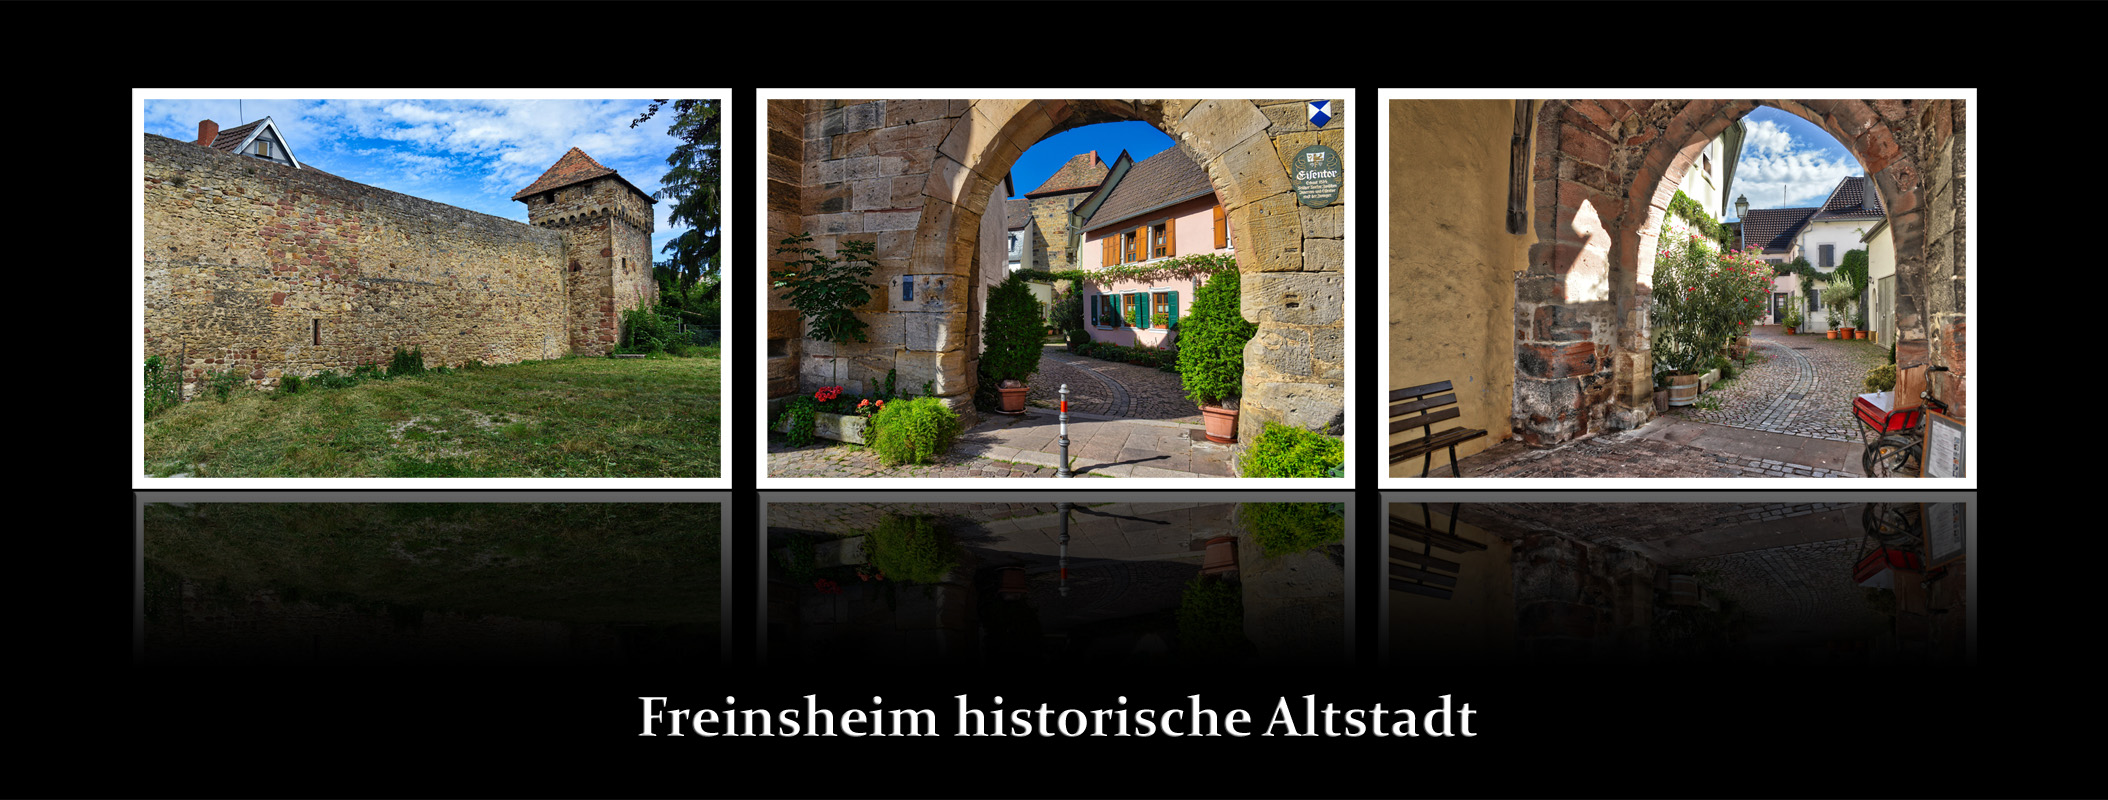 Freinsheim_Historische_Altstadt.jpg